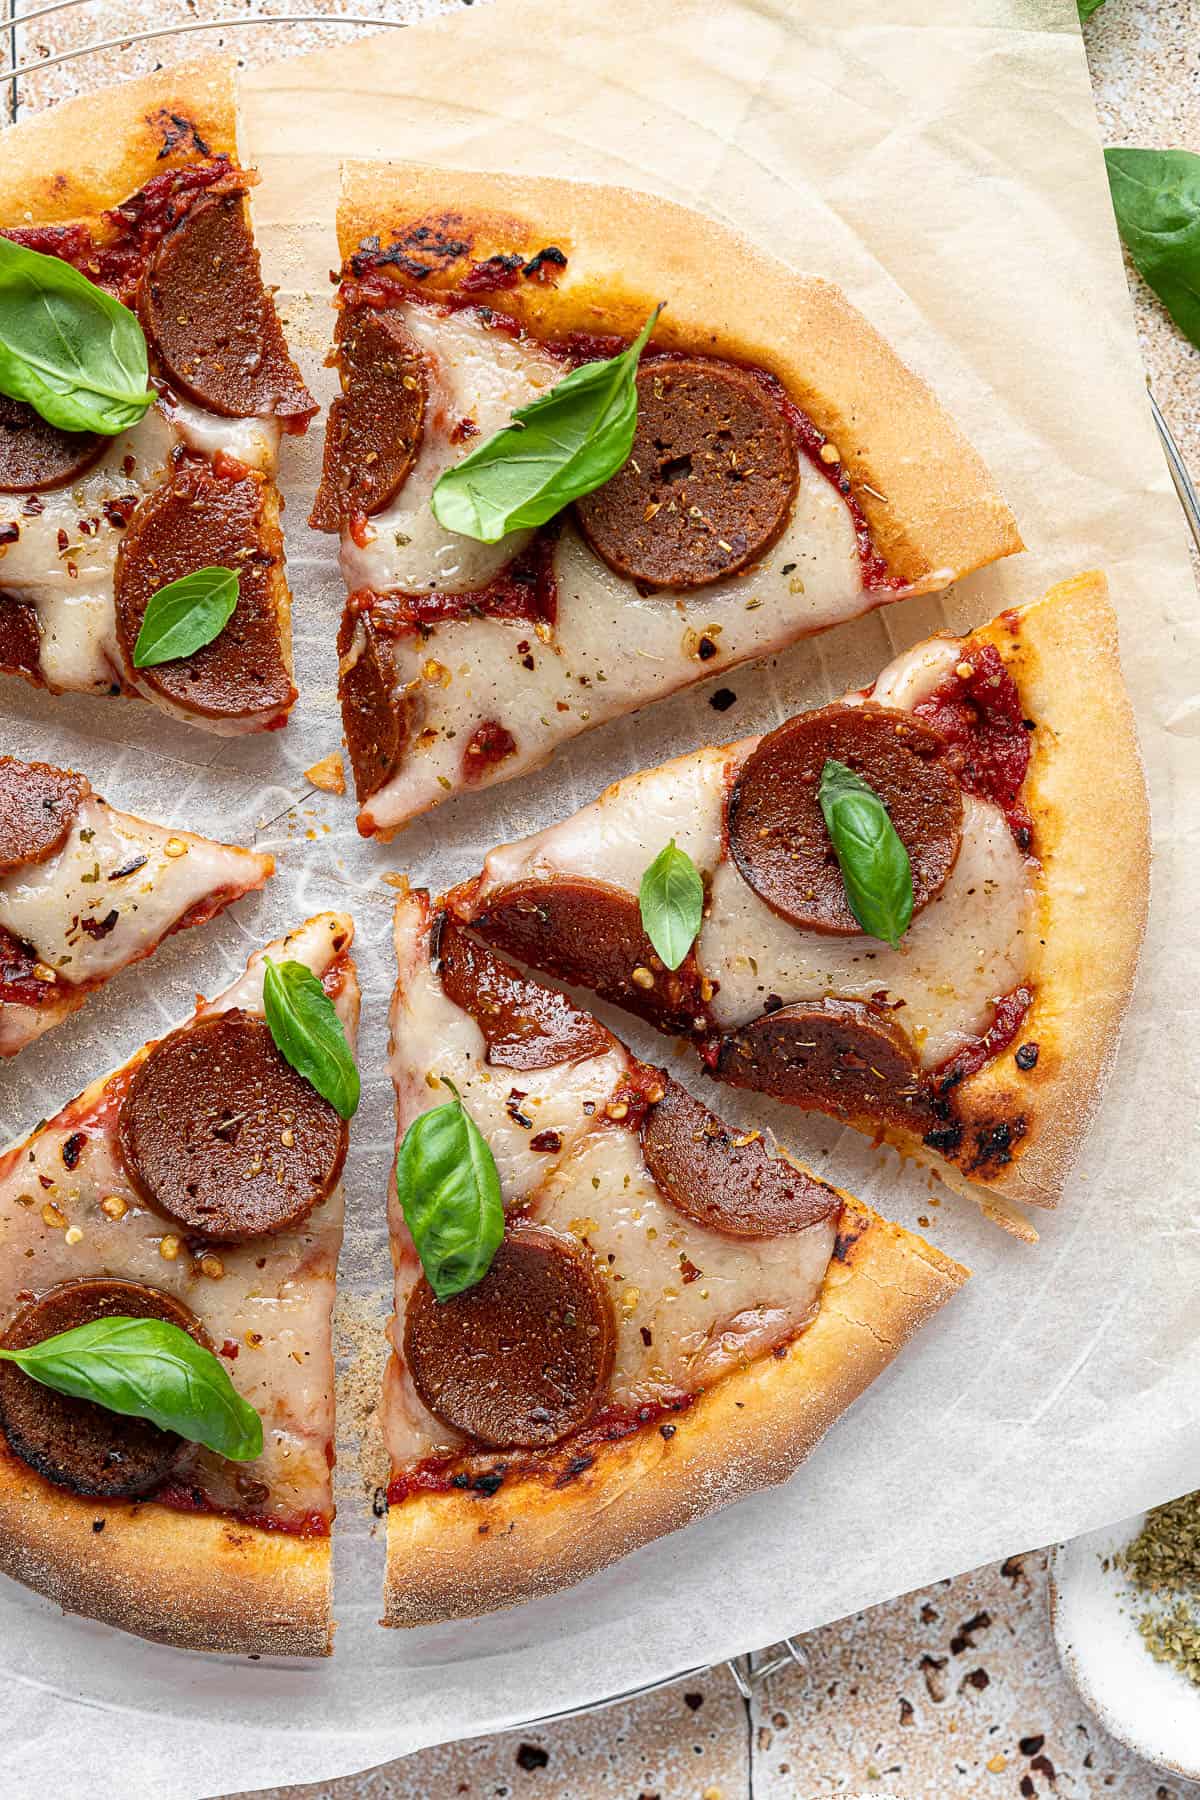 Slices of vegan pepperoni pizza.